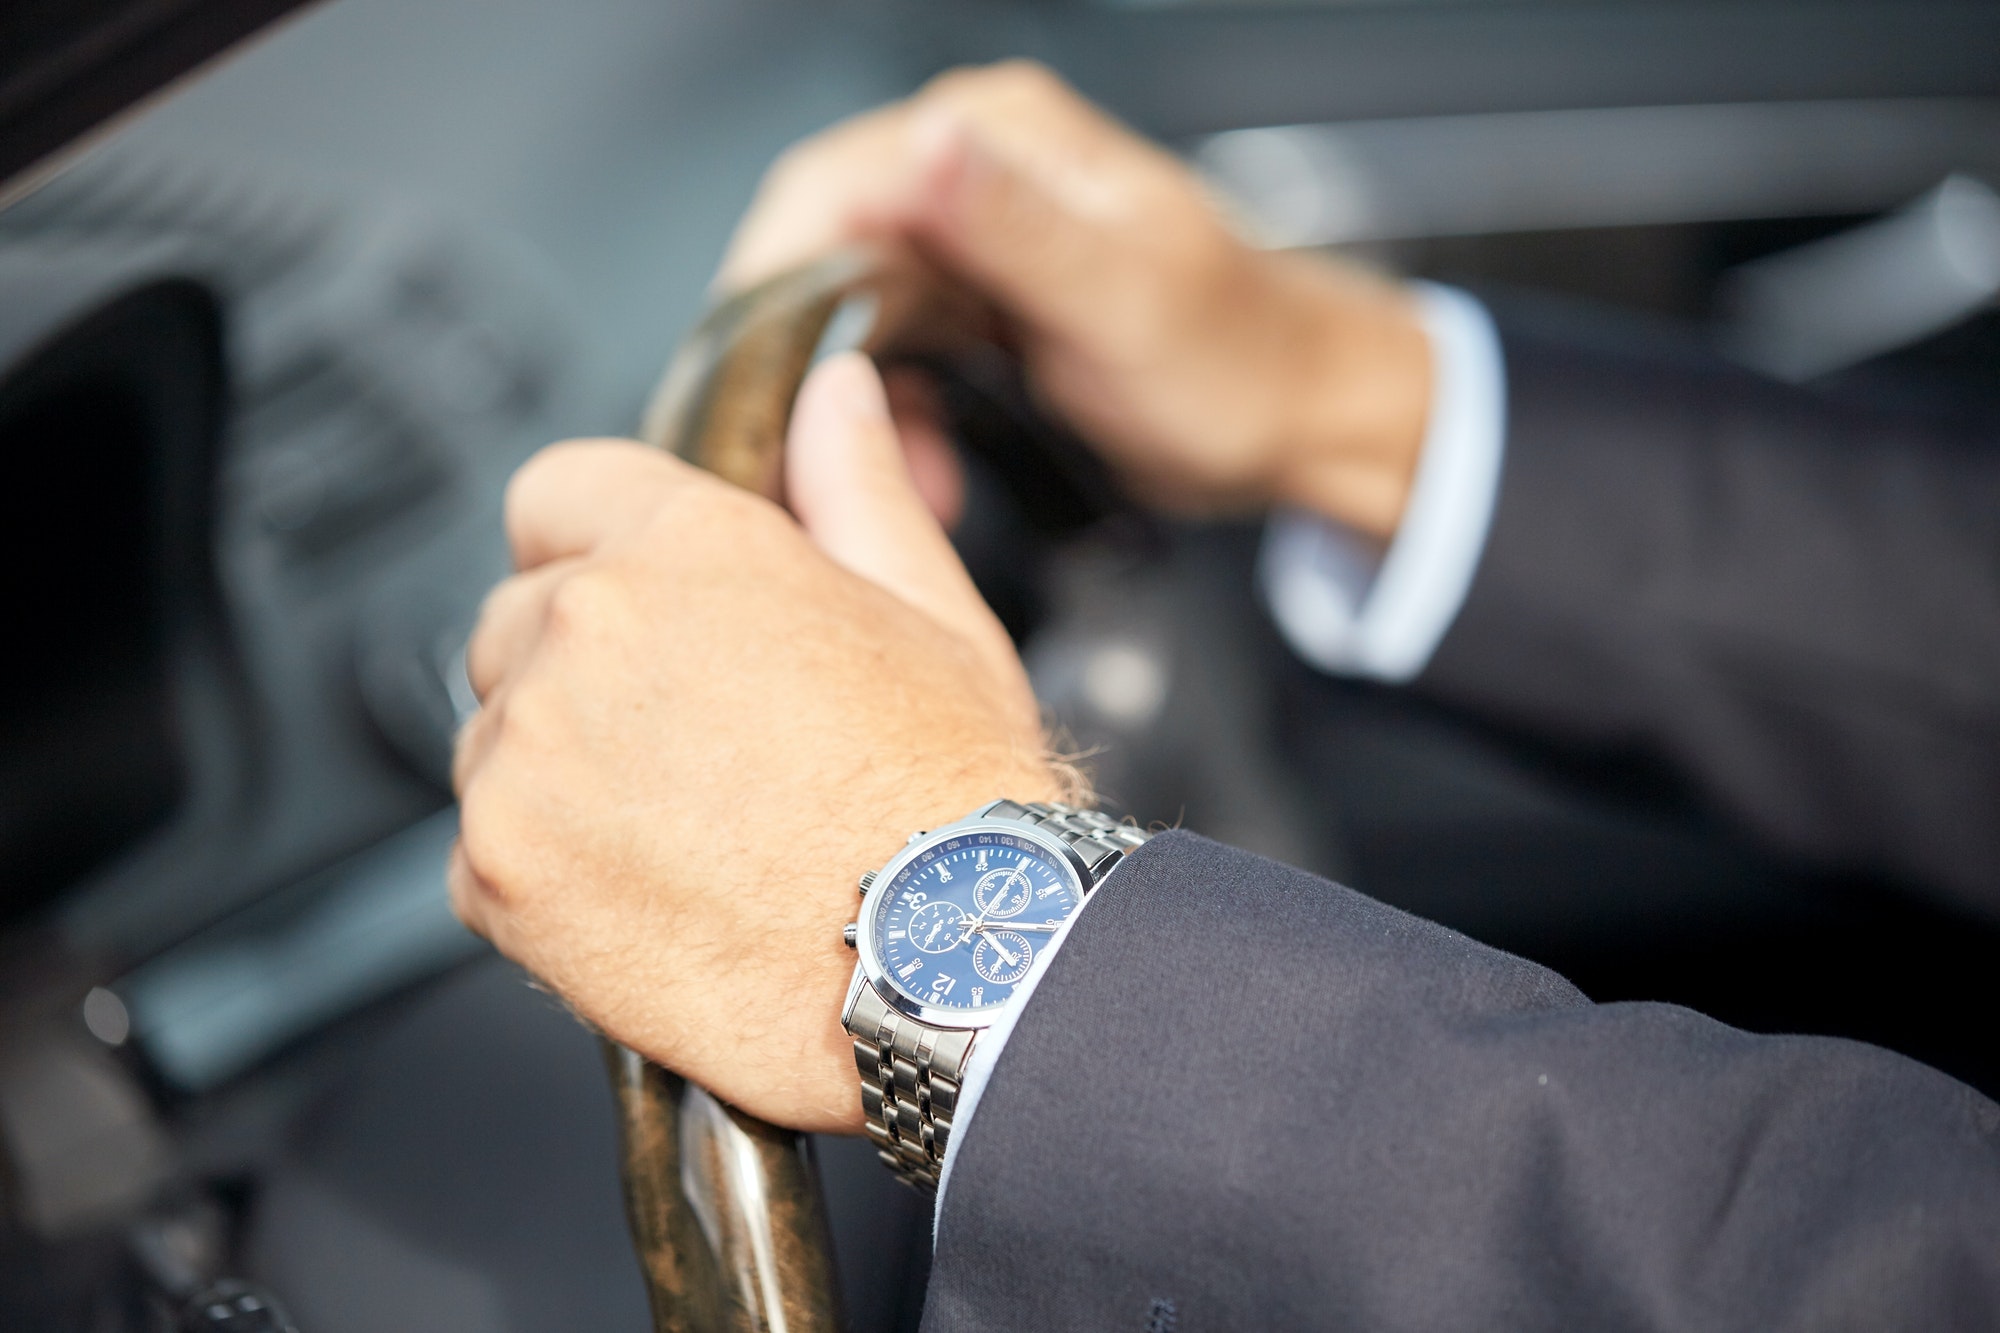 senior businessman hands driving car